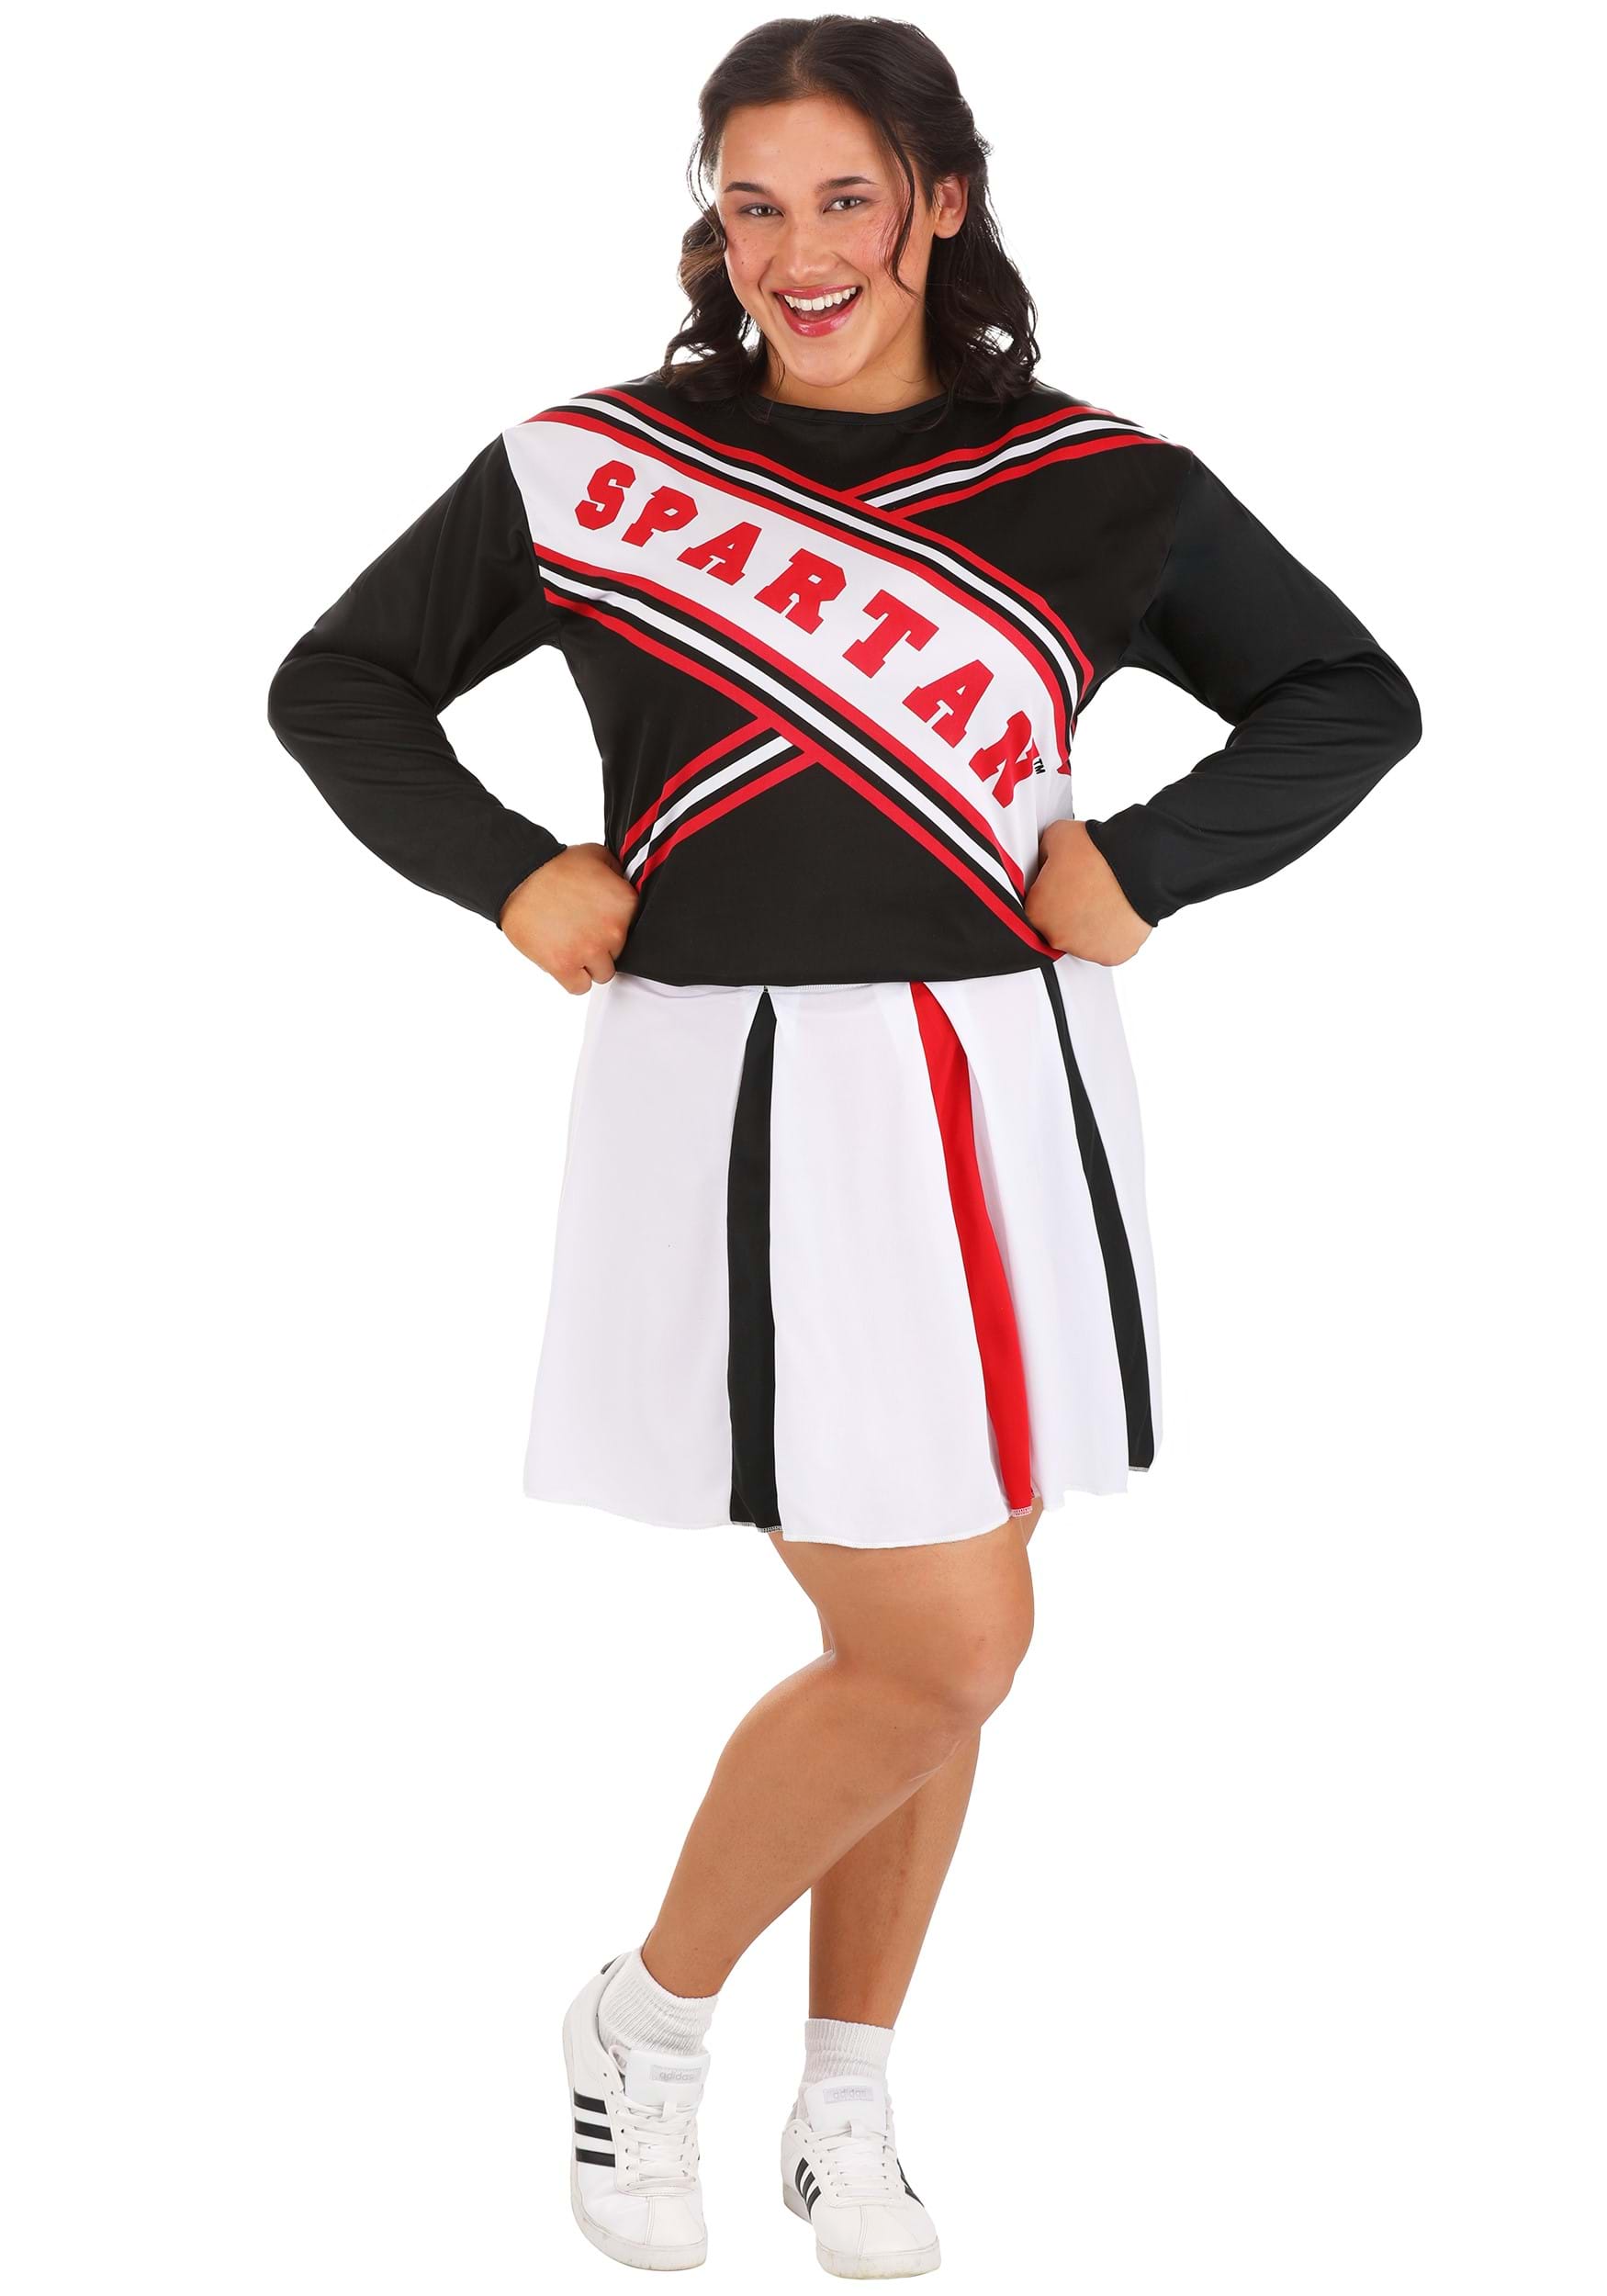 Plus Size Saturday Night Live Spartan Female Cheerleader Women's Costume